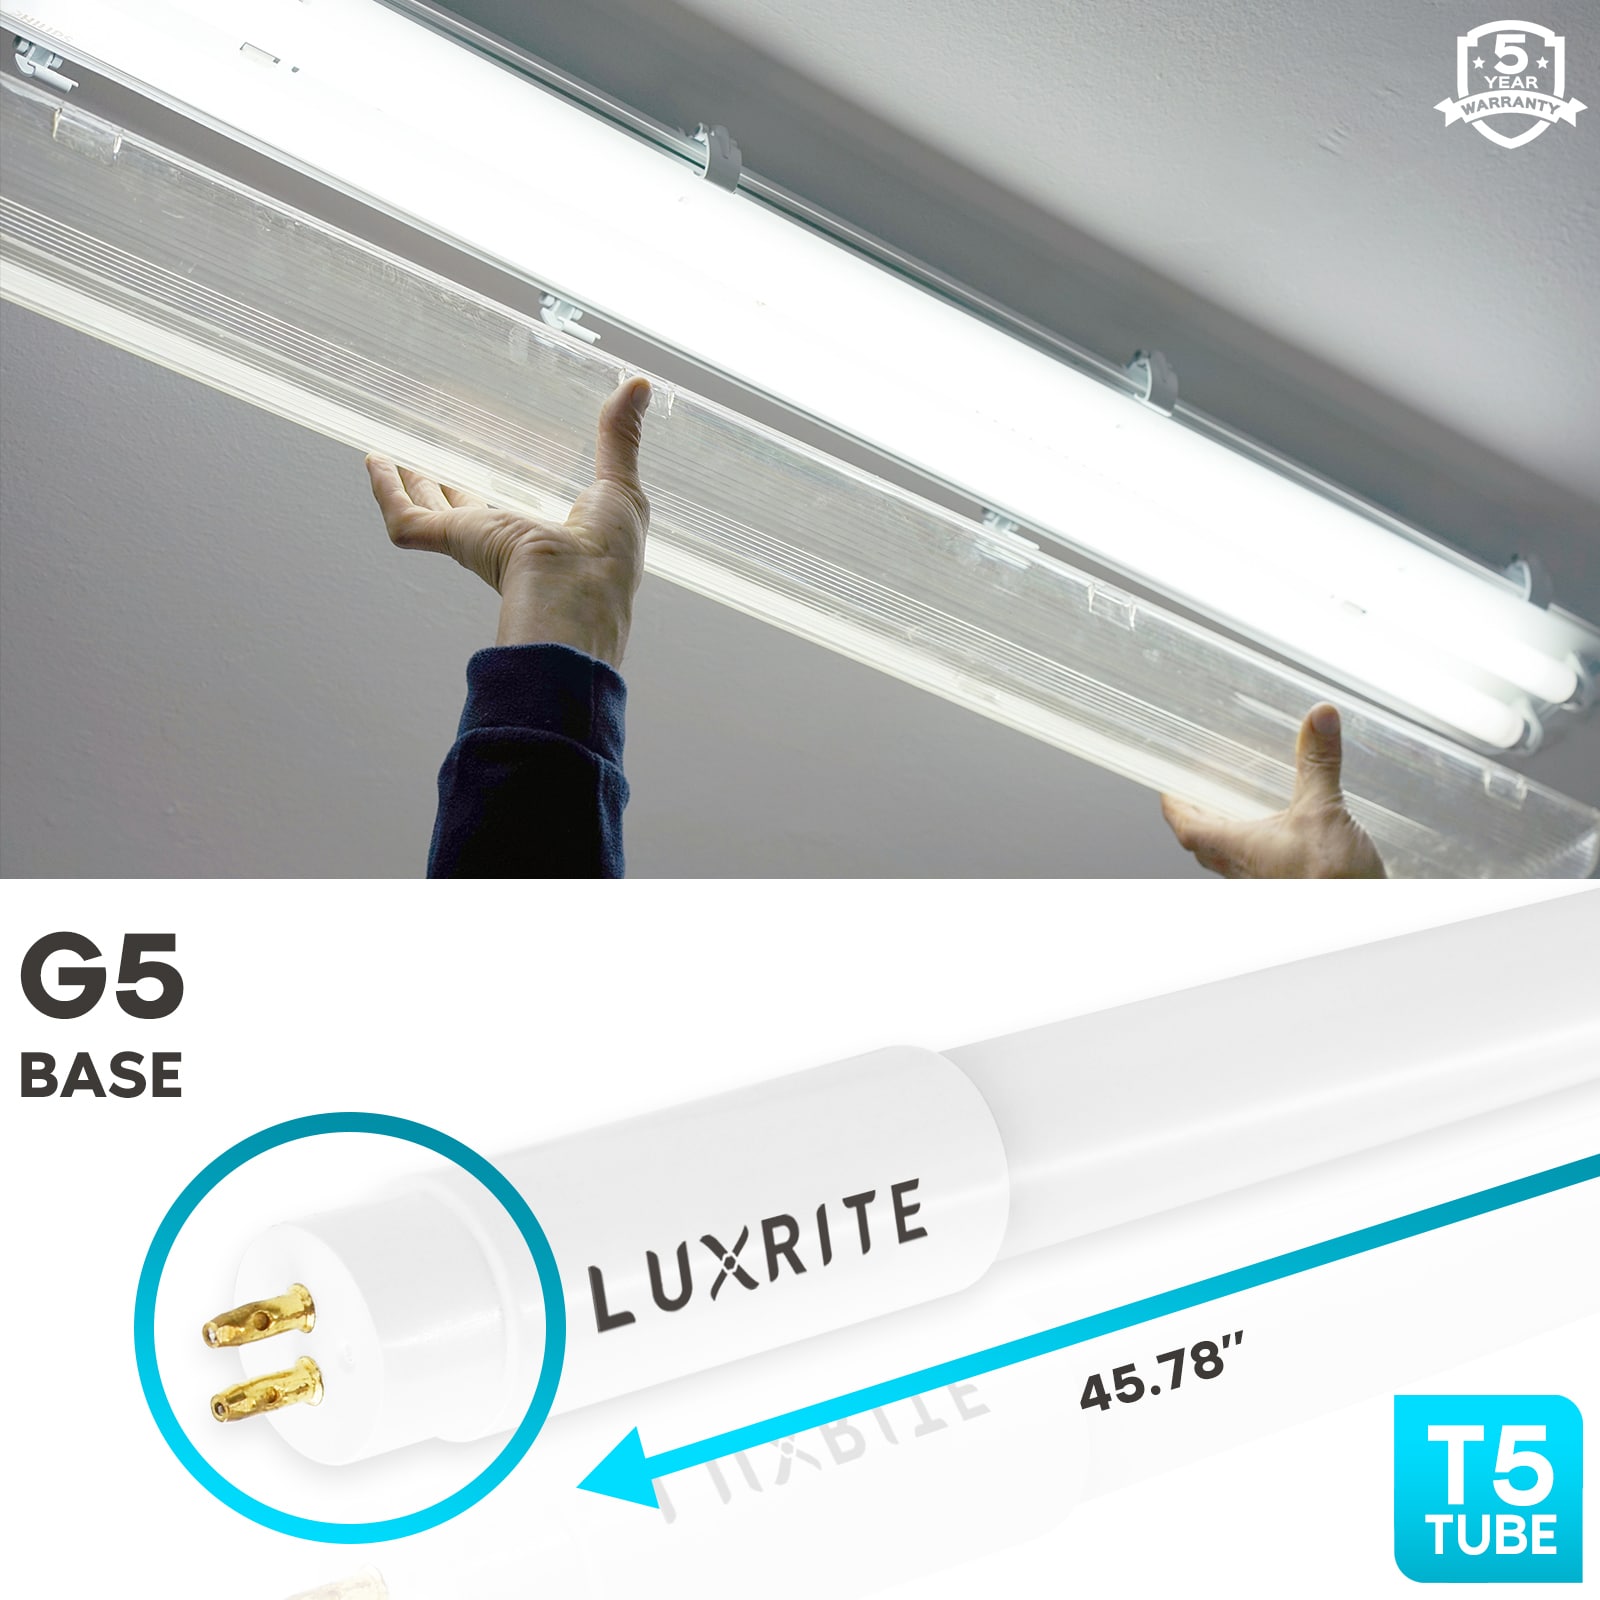 Luxrite EQ T5 Bright Miniature Bi-pin (T5) LED Light Bulb in Tube Light Bulbs at Lowes.com